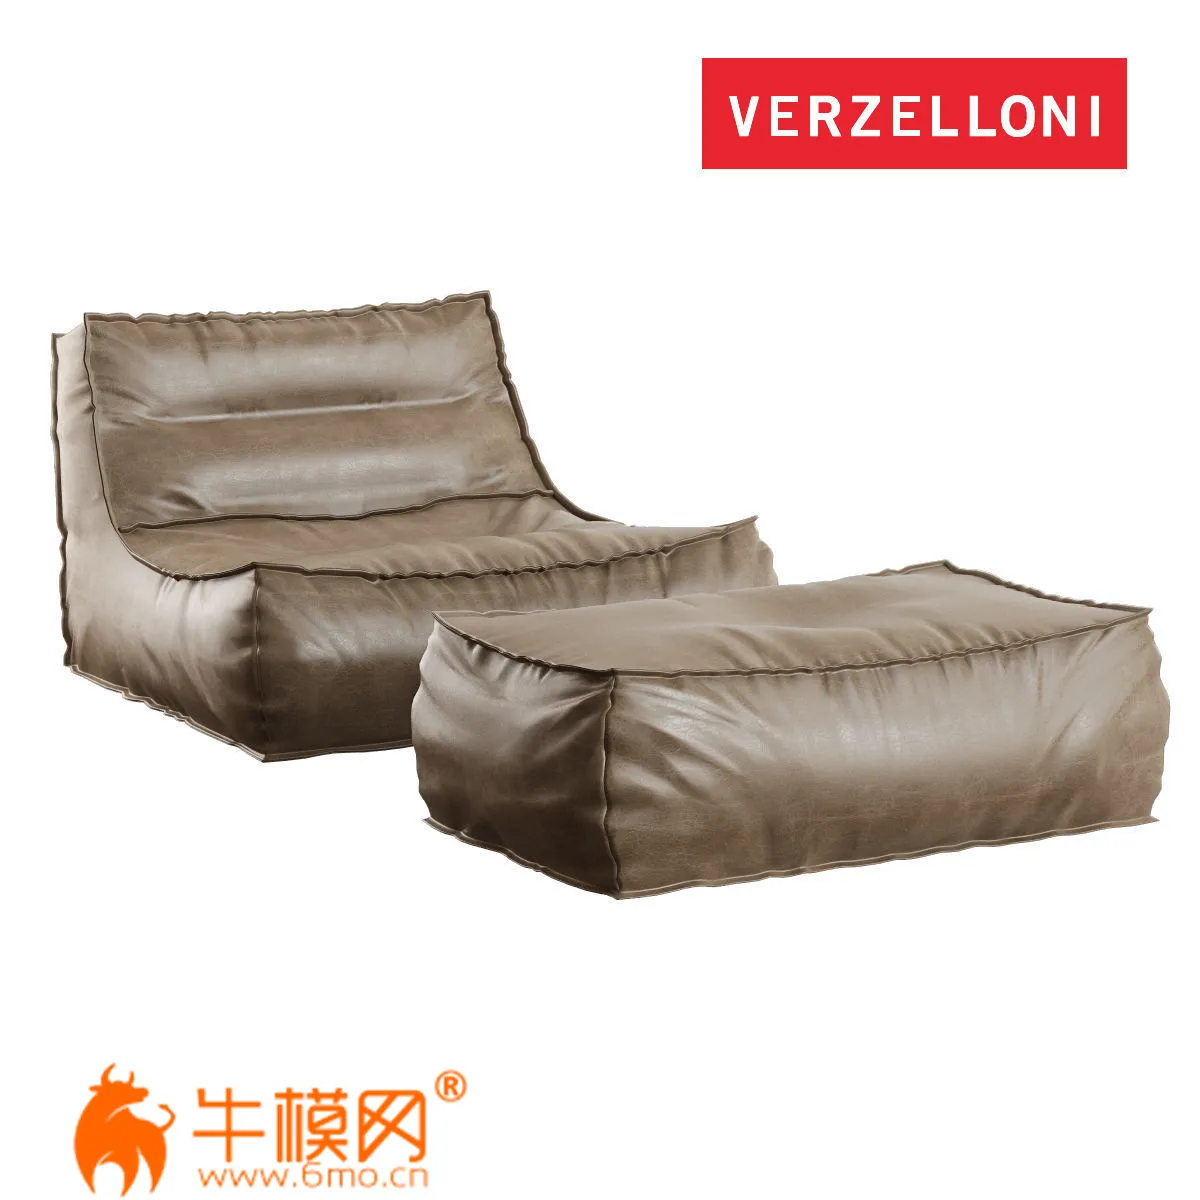 Verzelloni Zoe Large armchair and pouf – 3461